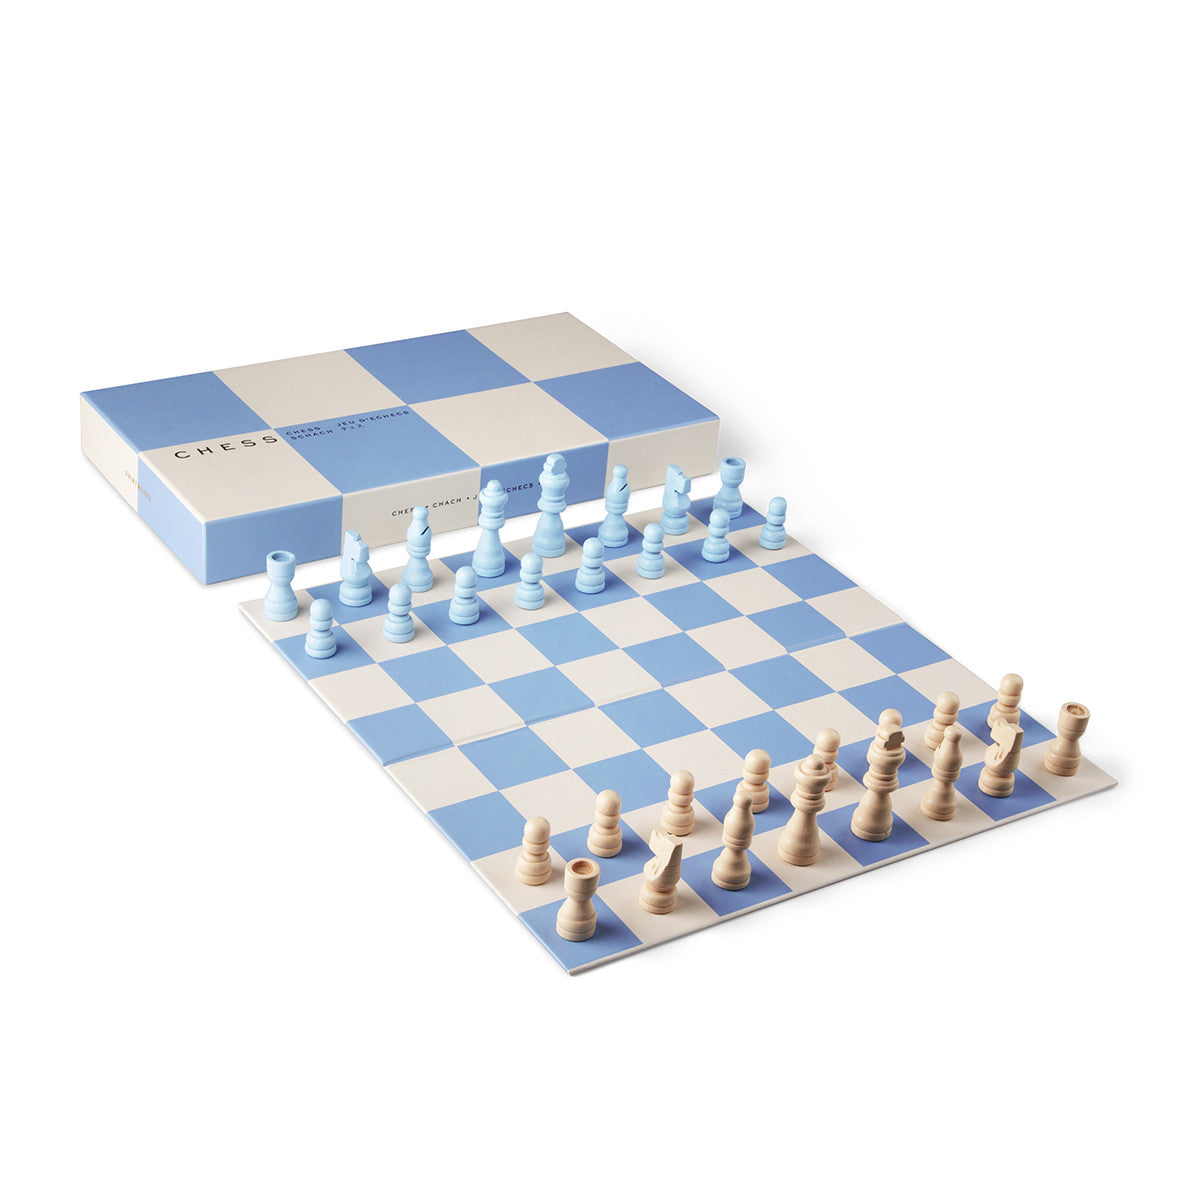 Printworks - Chess